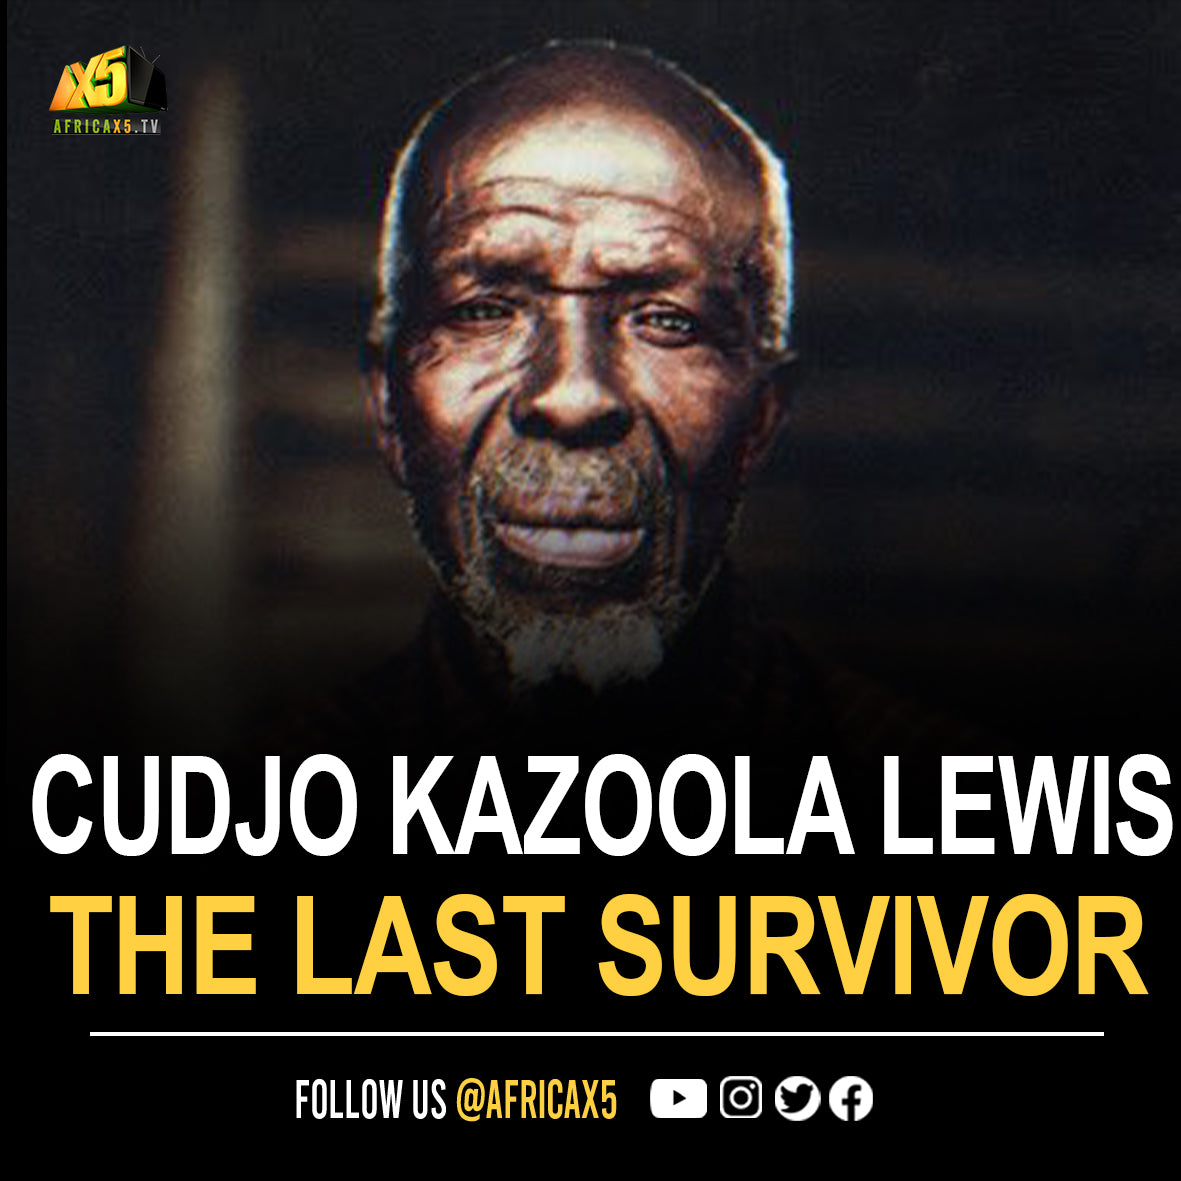 The last survivor of the transatlantic slave trade, Cudjo Kazoola Lewis (1931). He was among 110 enslaved Africans aboard the Clotilda.